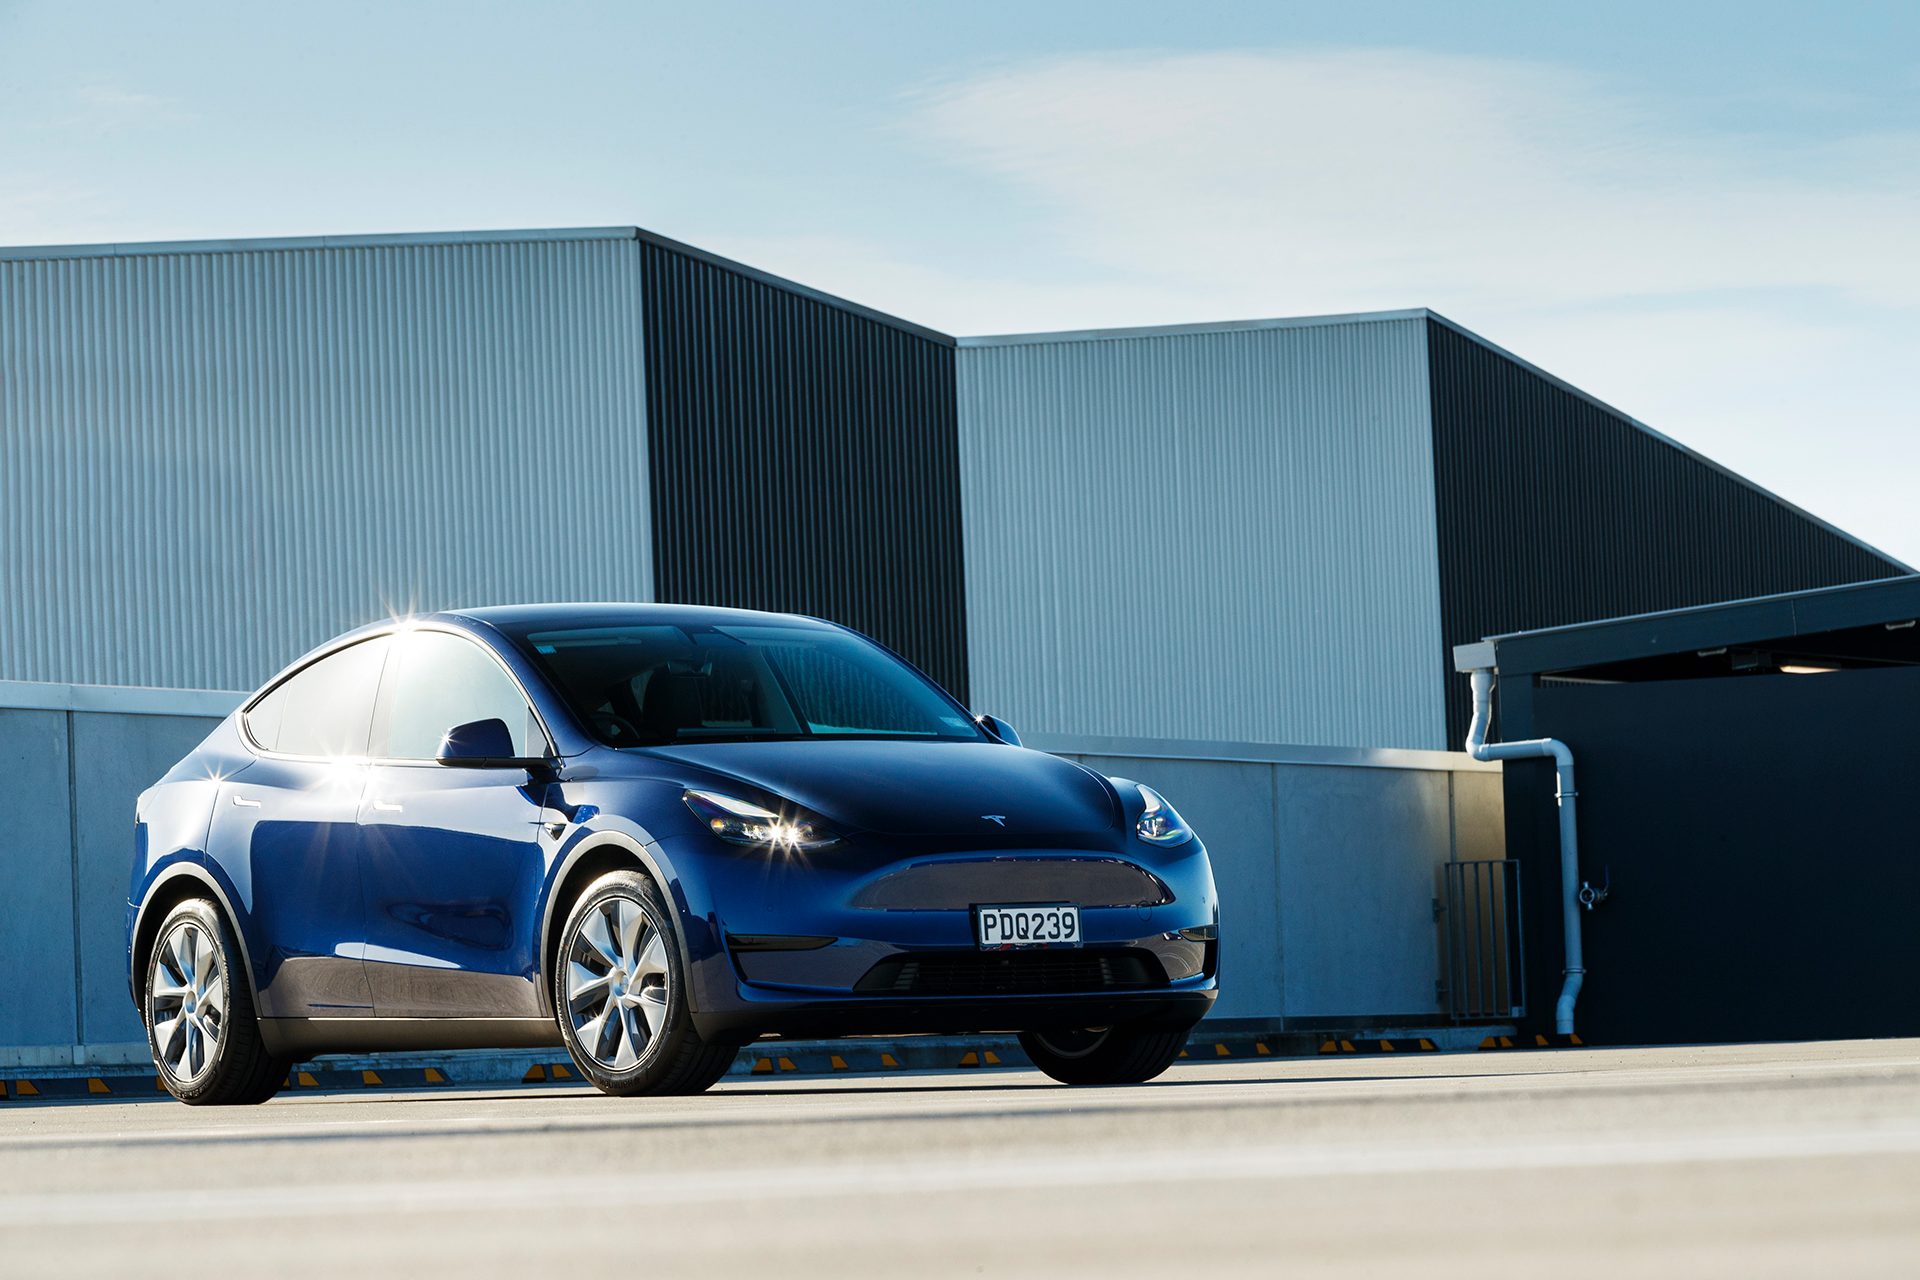 Review: 2020 Tesla Model Y Performance road test